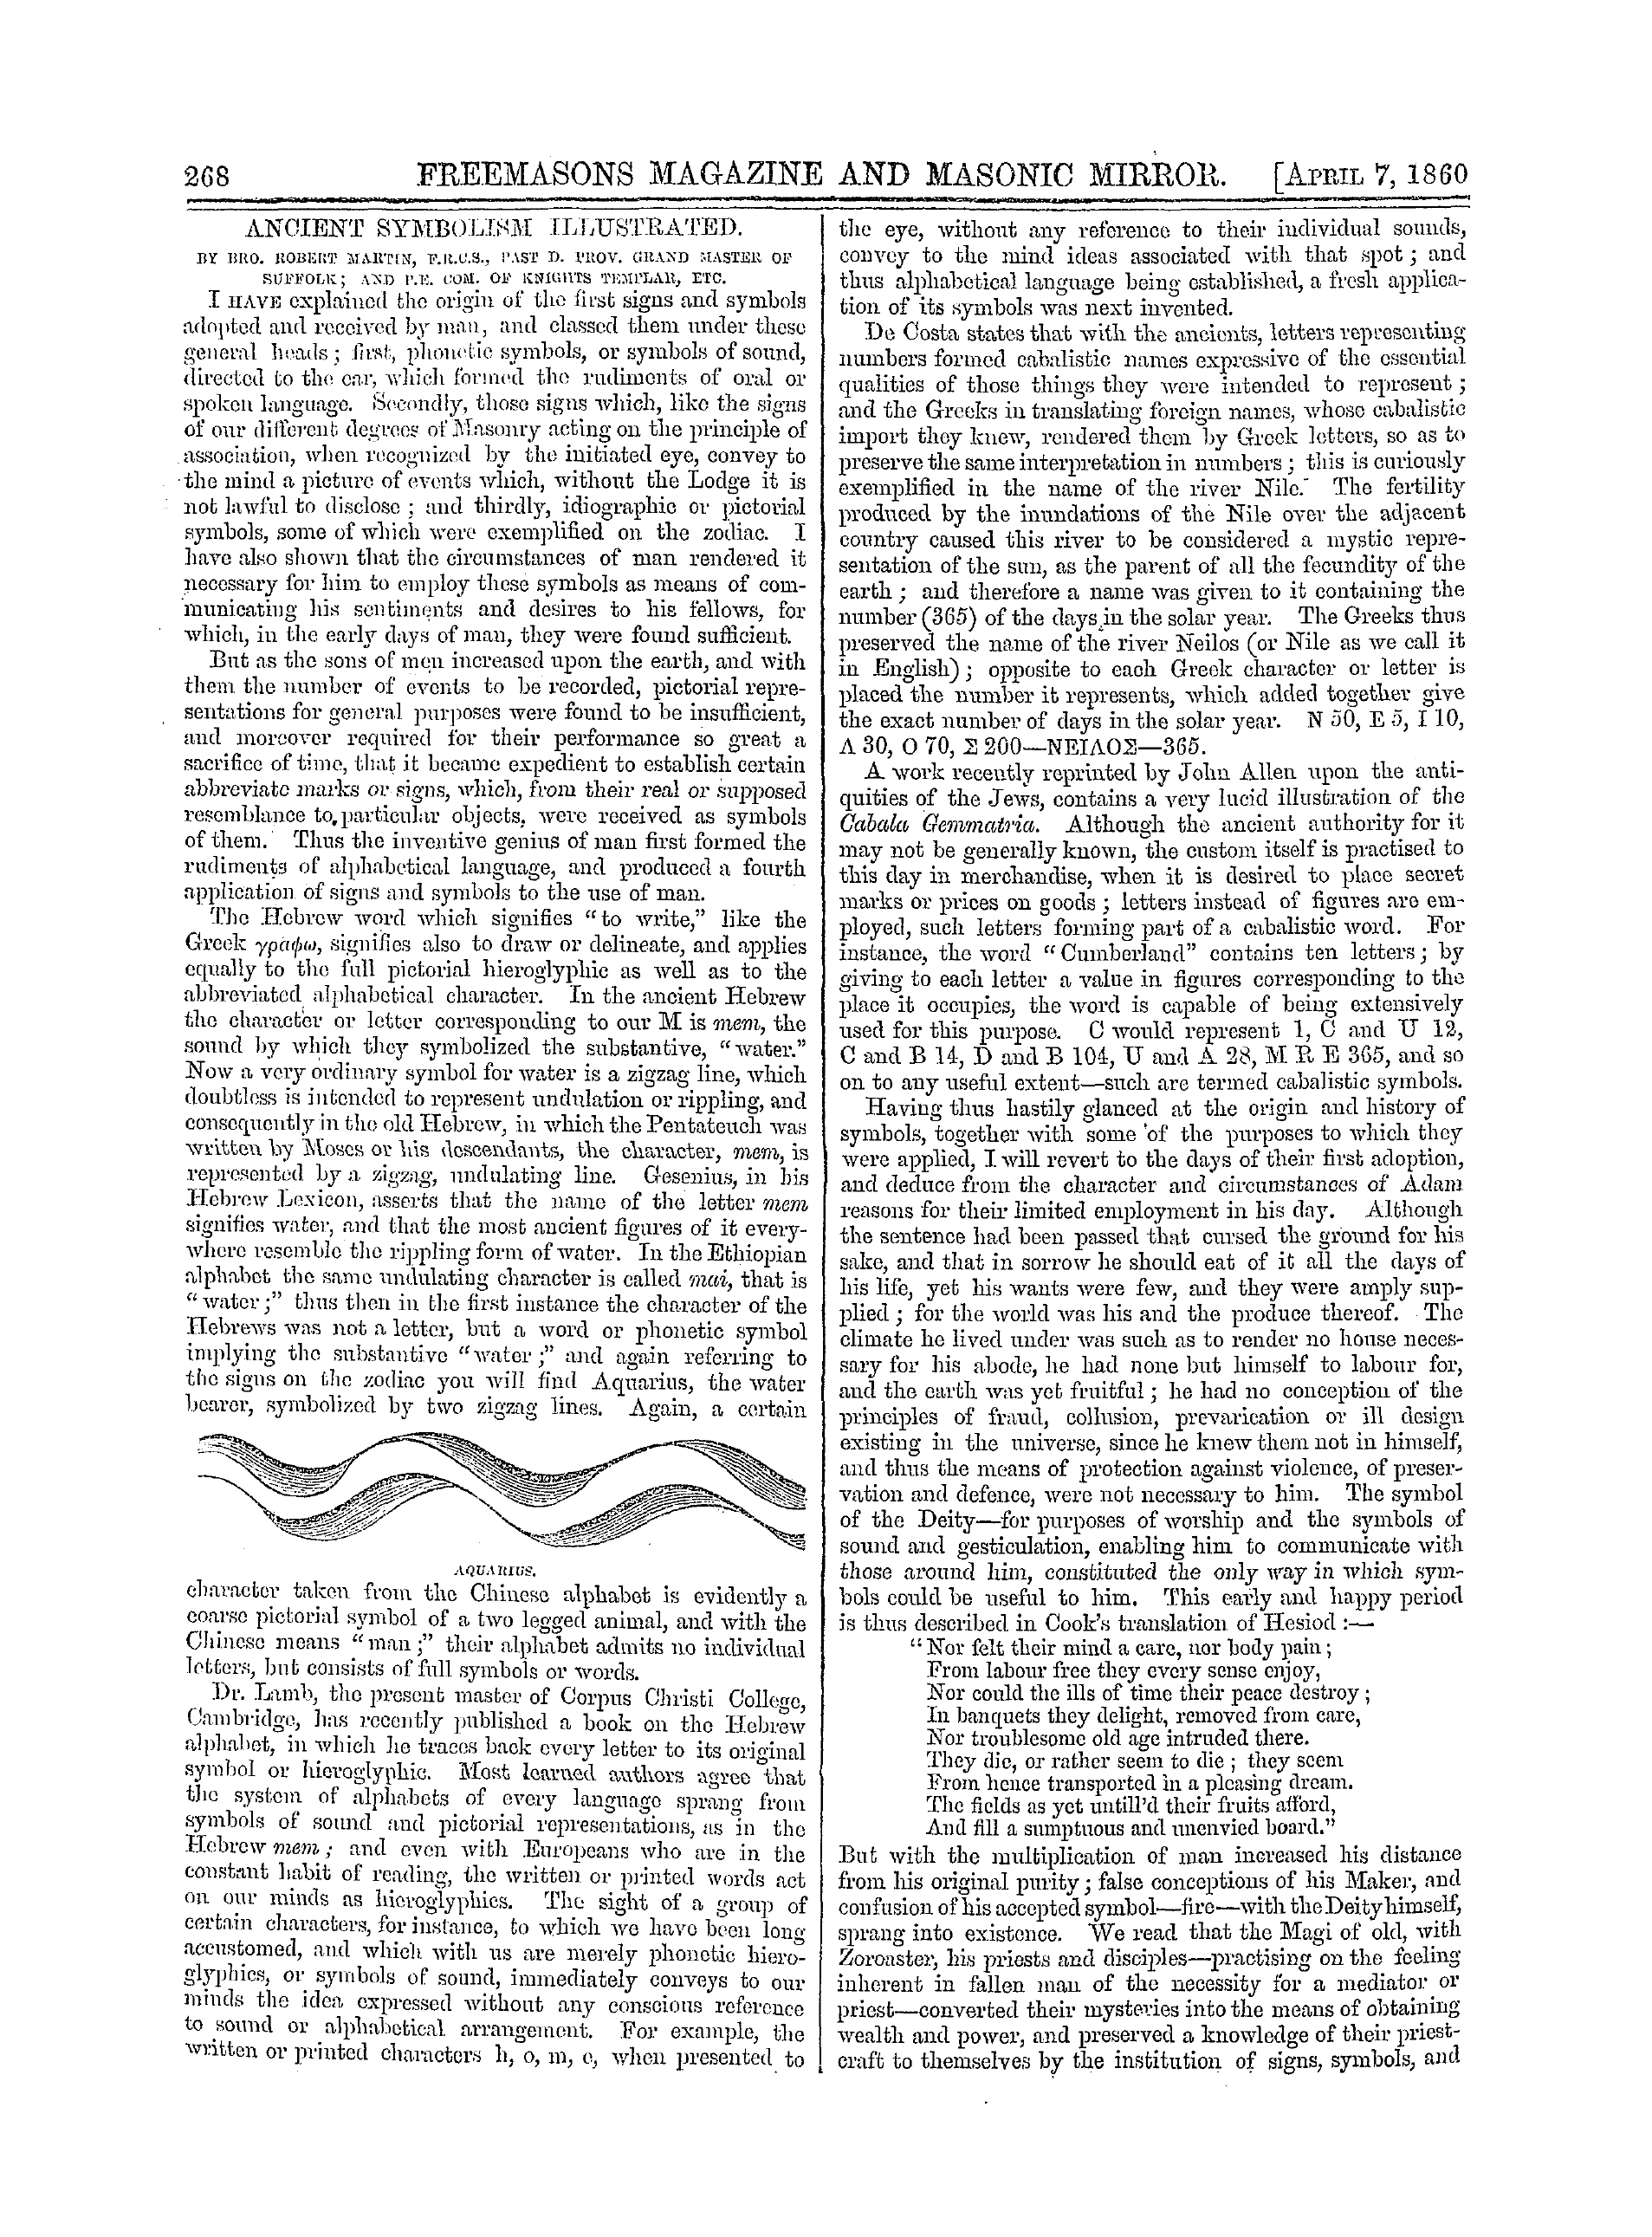 The Freemasons' Monthly Magazine: 1860-04-07 - Ancient Symbolism Illustrated.